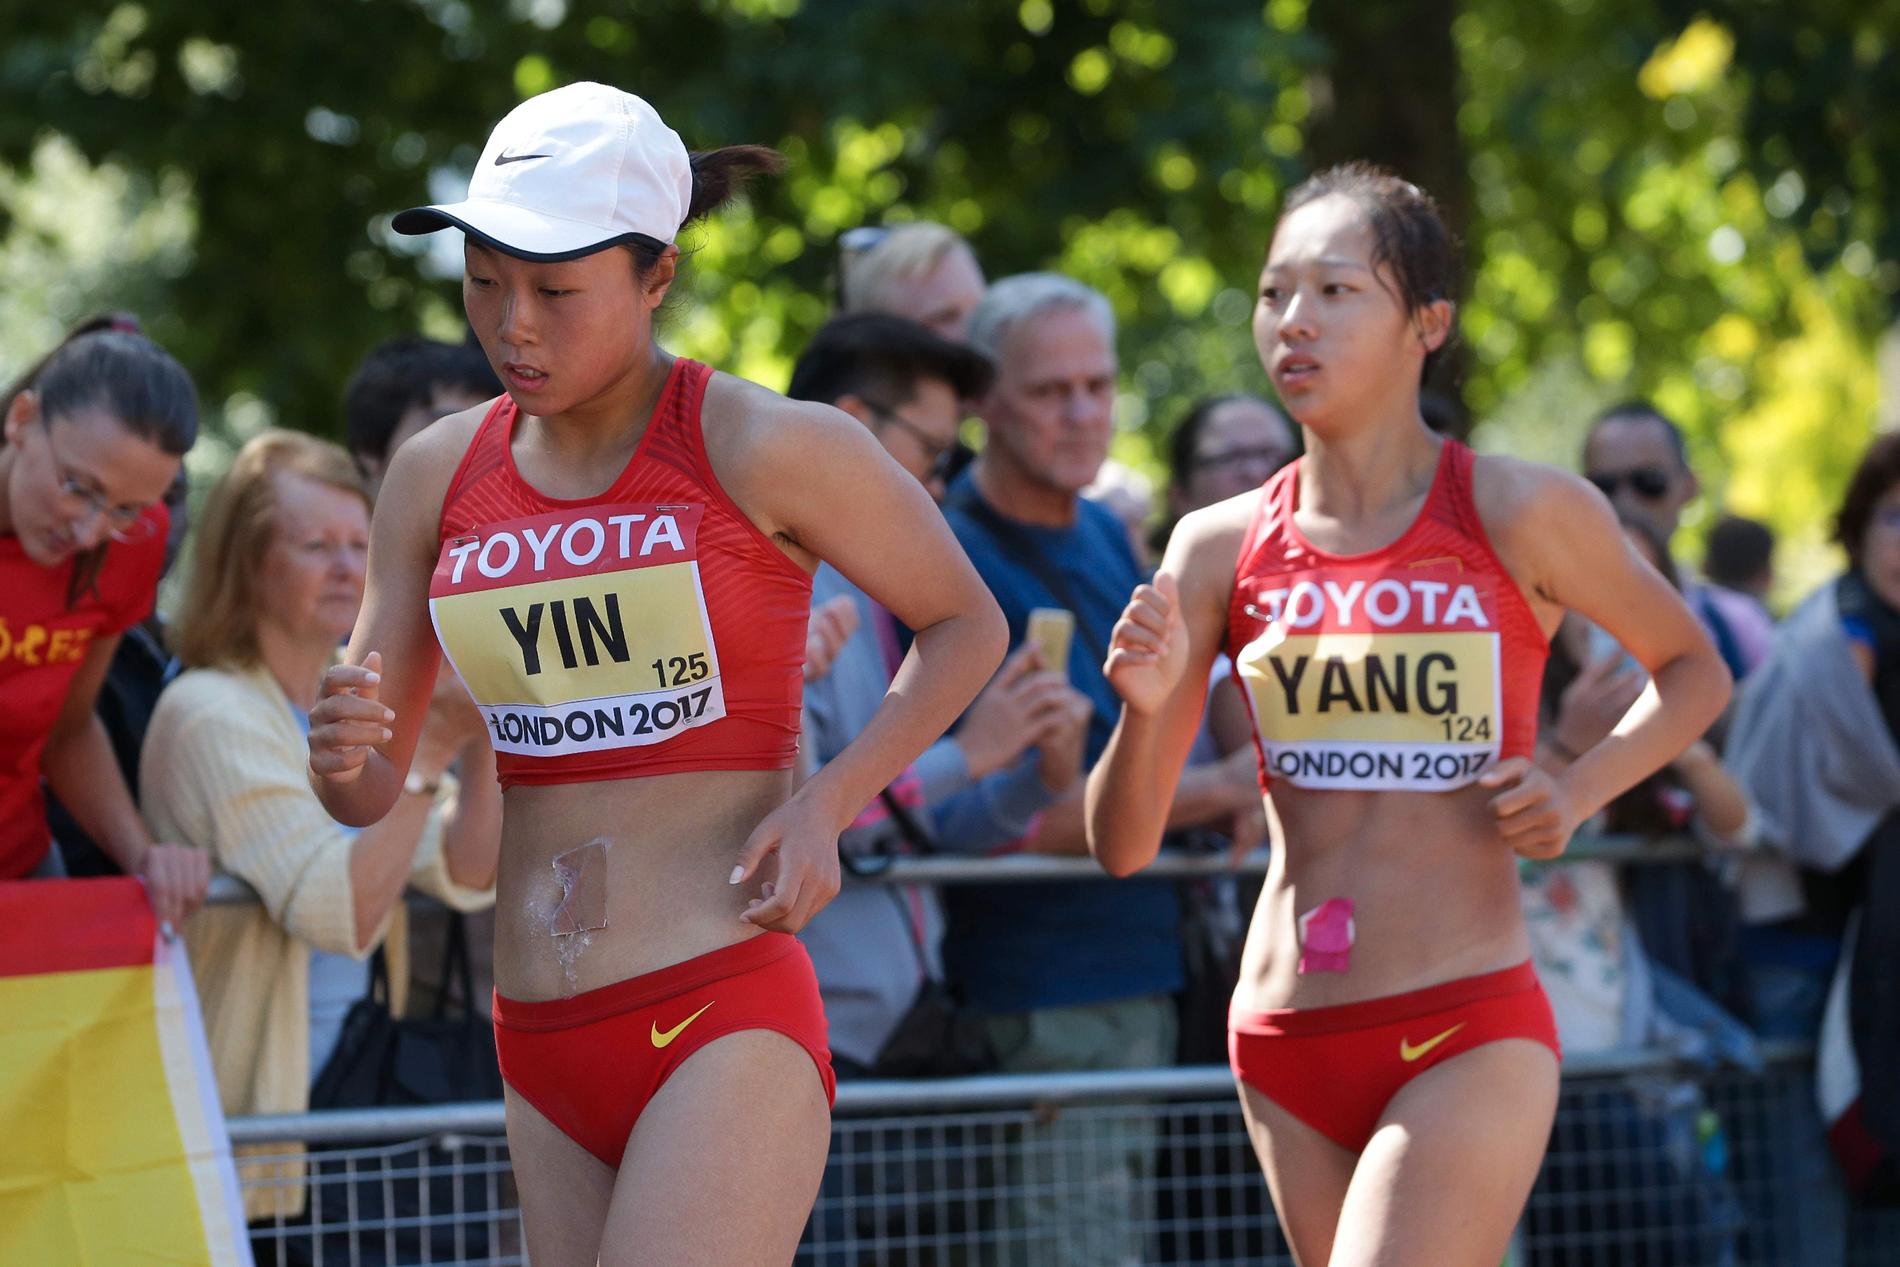 Hang Yin och Shuqing Yang tog silver och brons.